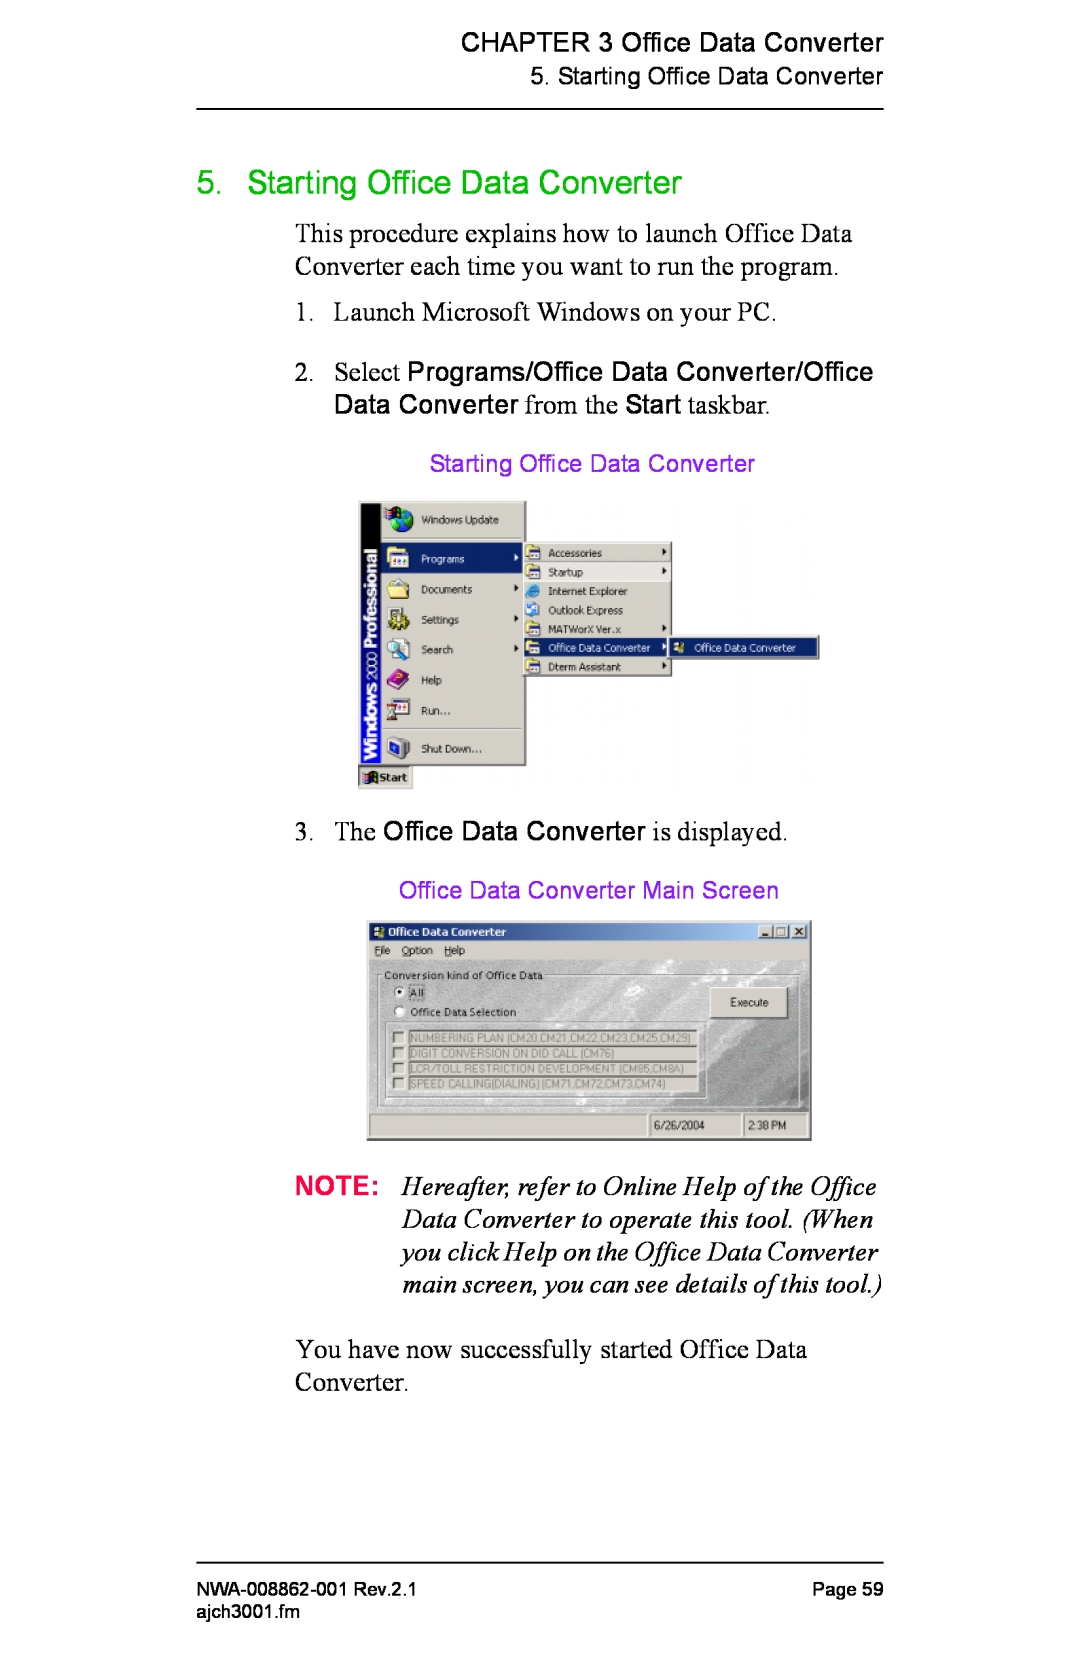 NEC manual Starting Office Data Converter, Office Data Converter Main Screen, NWA-008862-001 Rev.2.1, Page, ajch3001.fm 